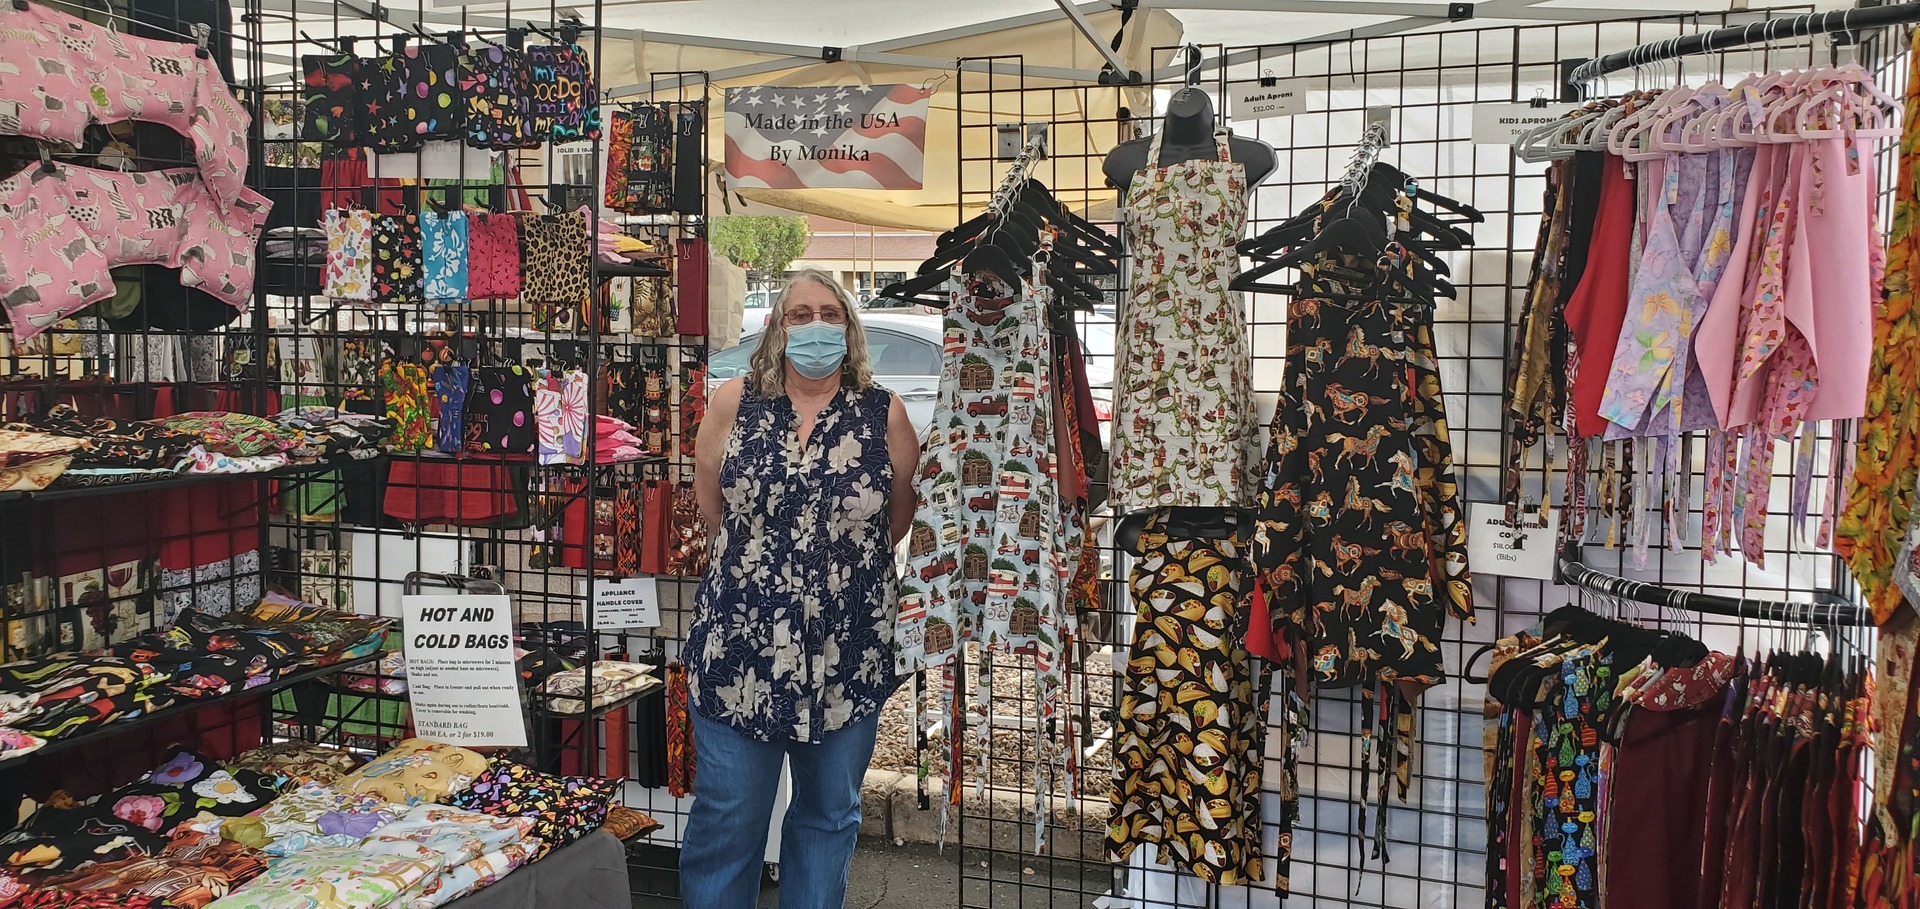 Art And Craft Festival, Tucson, Arizona, United States